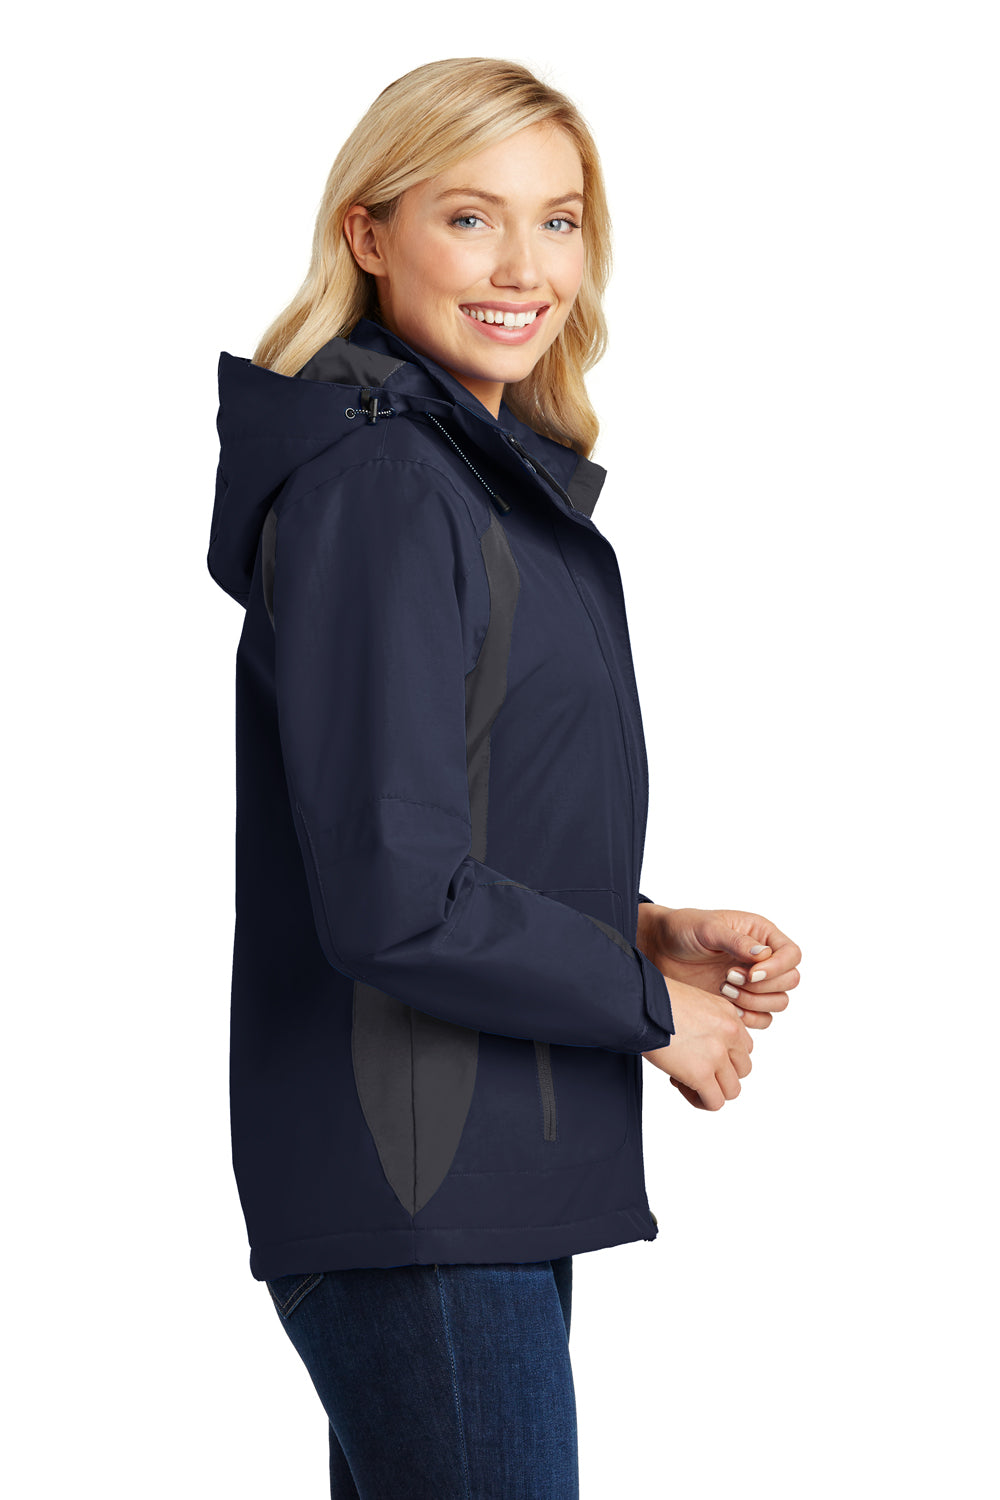 Port Authority L304 Womens All Season II Waterproof Full Zip Hooded Jacket Navy Blue/Iron Grey Side